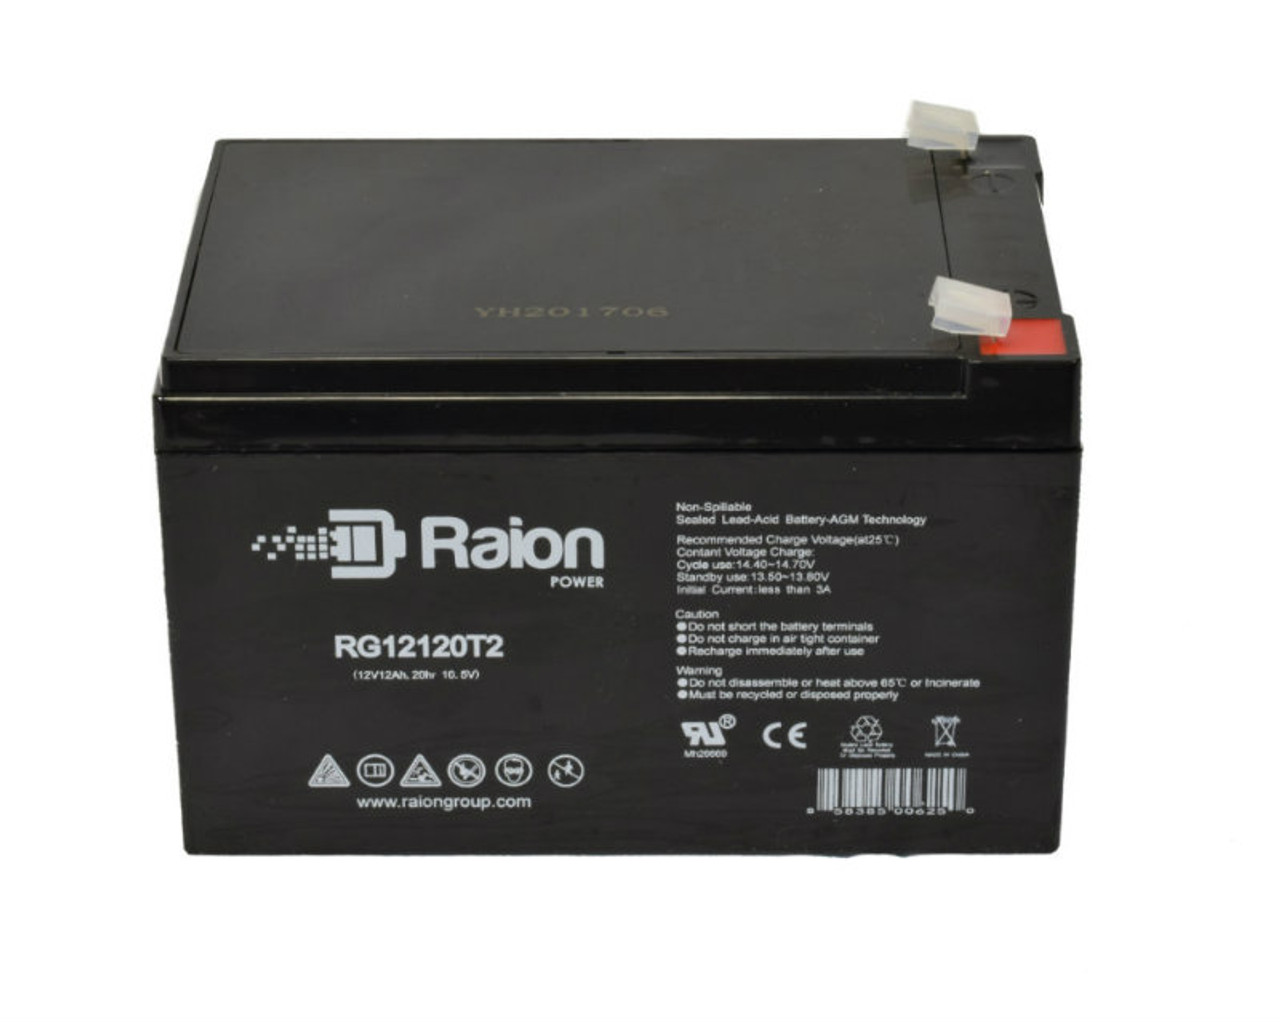 Raion Power RG12120T2 SLA Battery for NEATA NT12-14